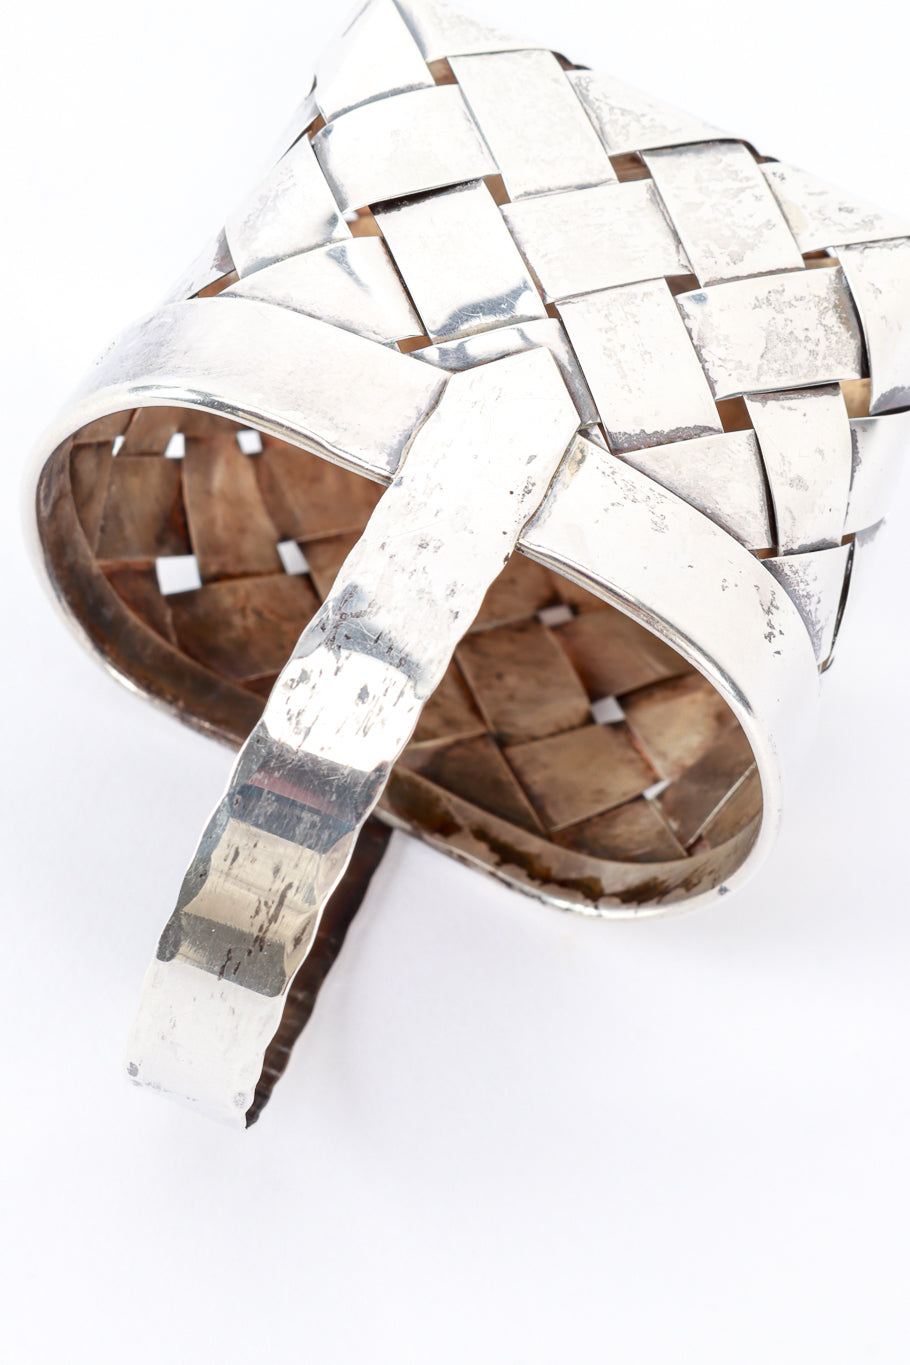 Cartier Sterling Woven Basket III tarnish detail @RECESS LA